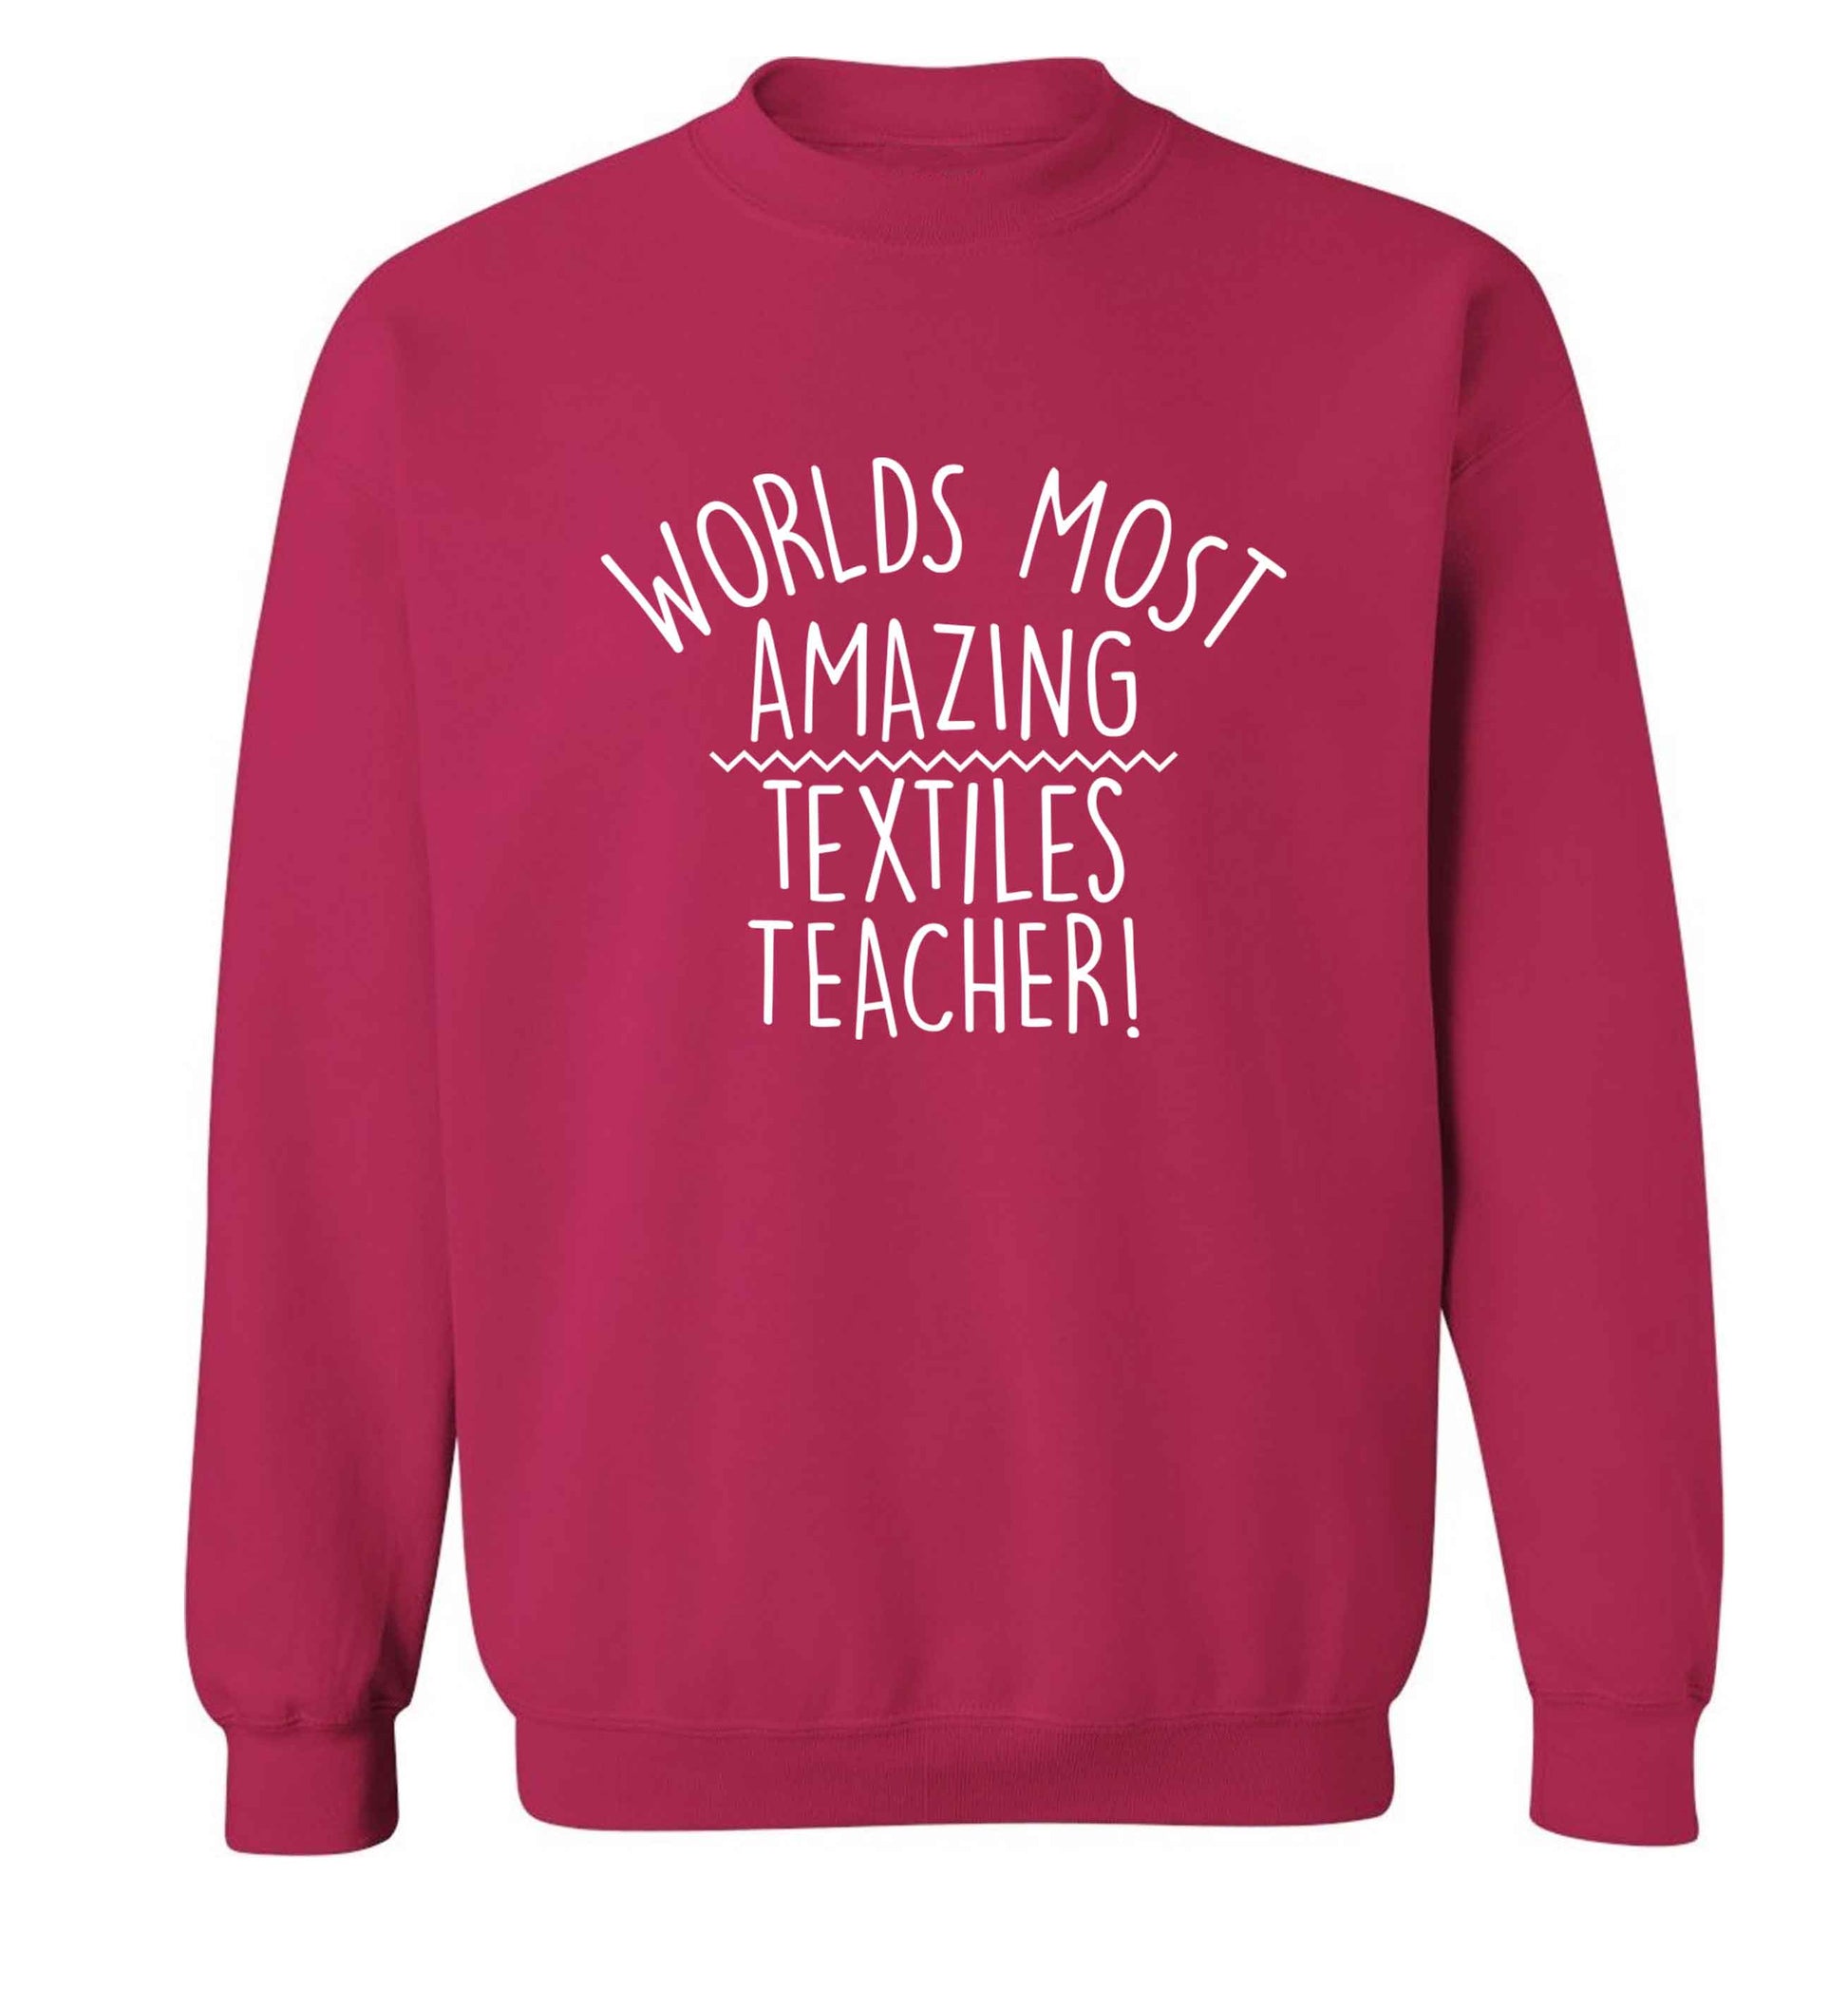 Worlds most amazing textiles teacher adult's unisex pink sweater 2XL